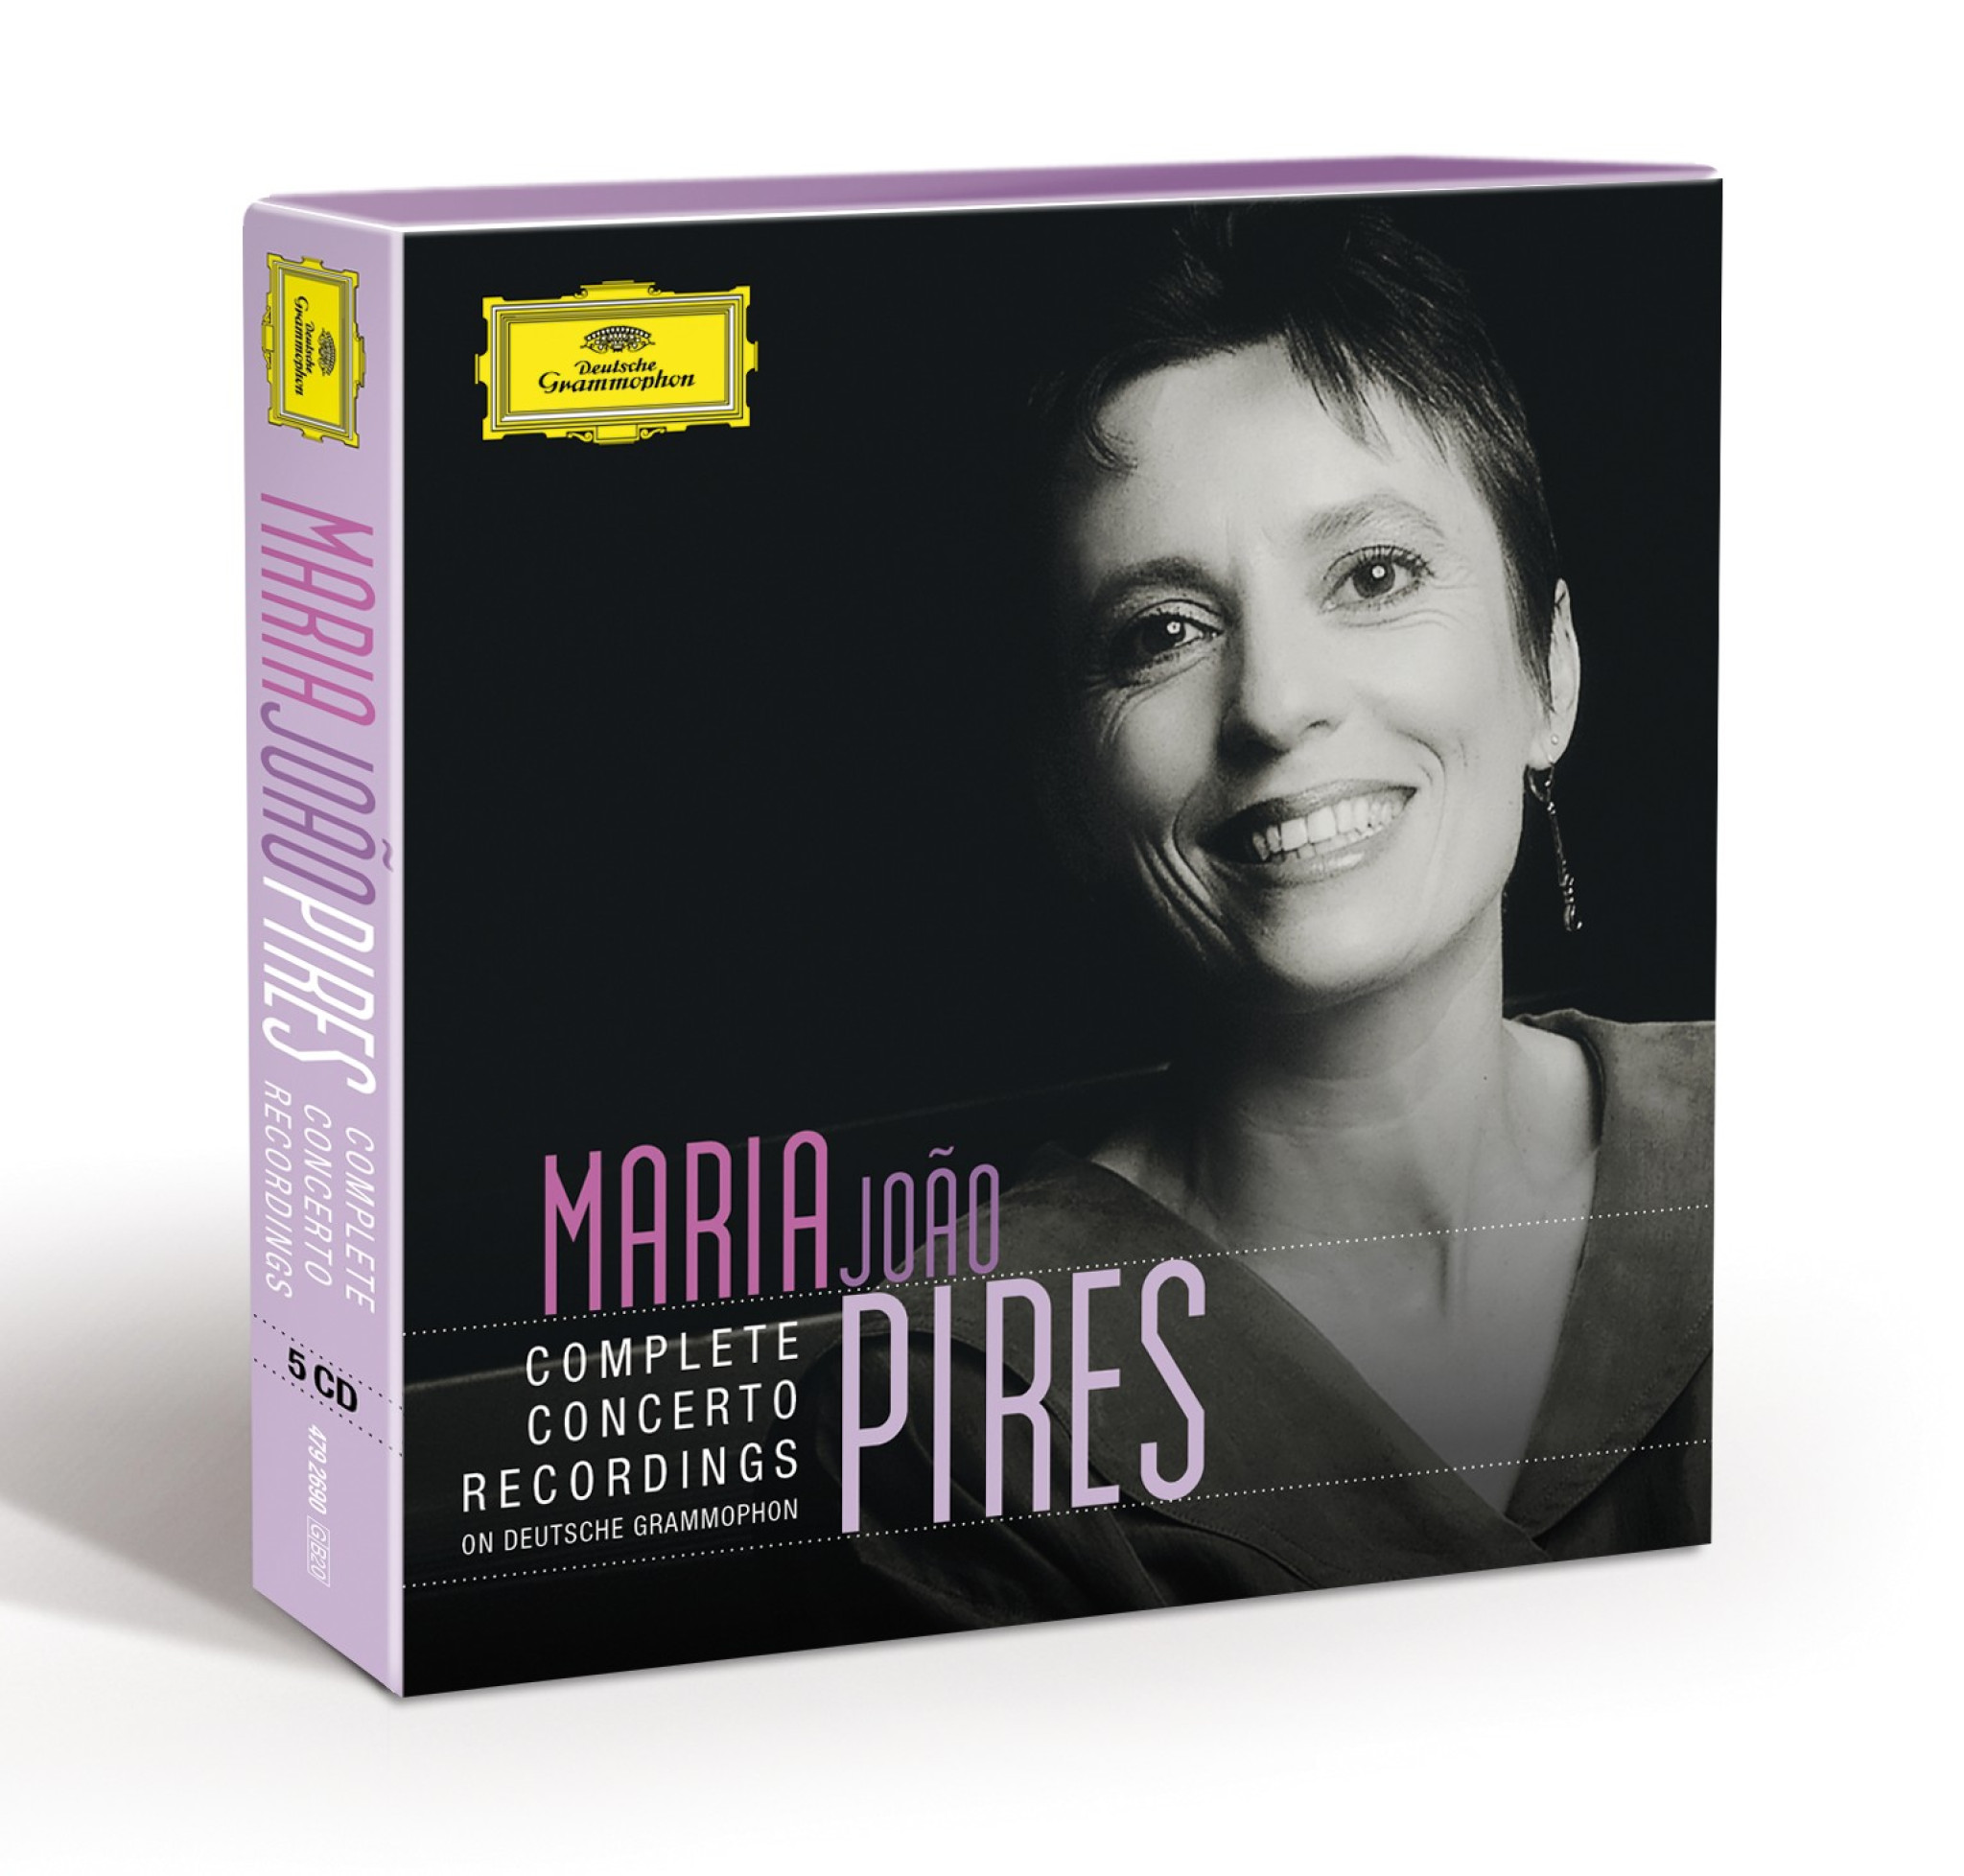 Maria Joao Pires Complete DG Concerto